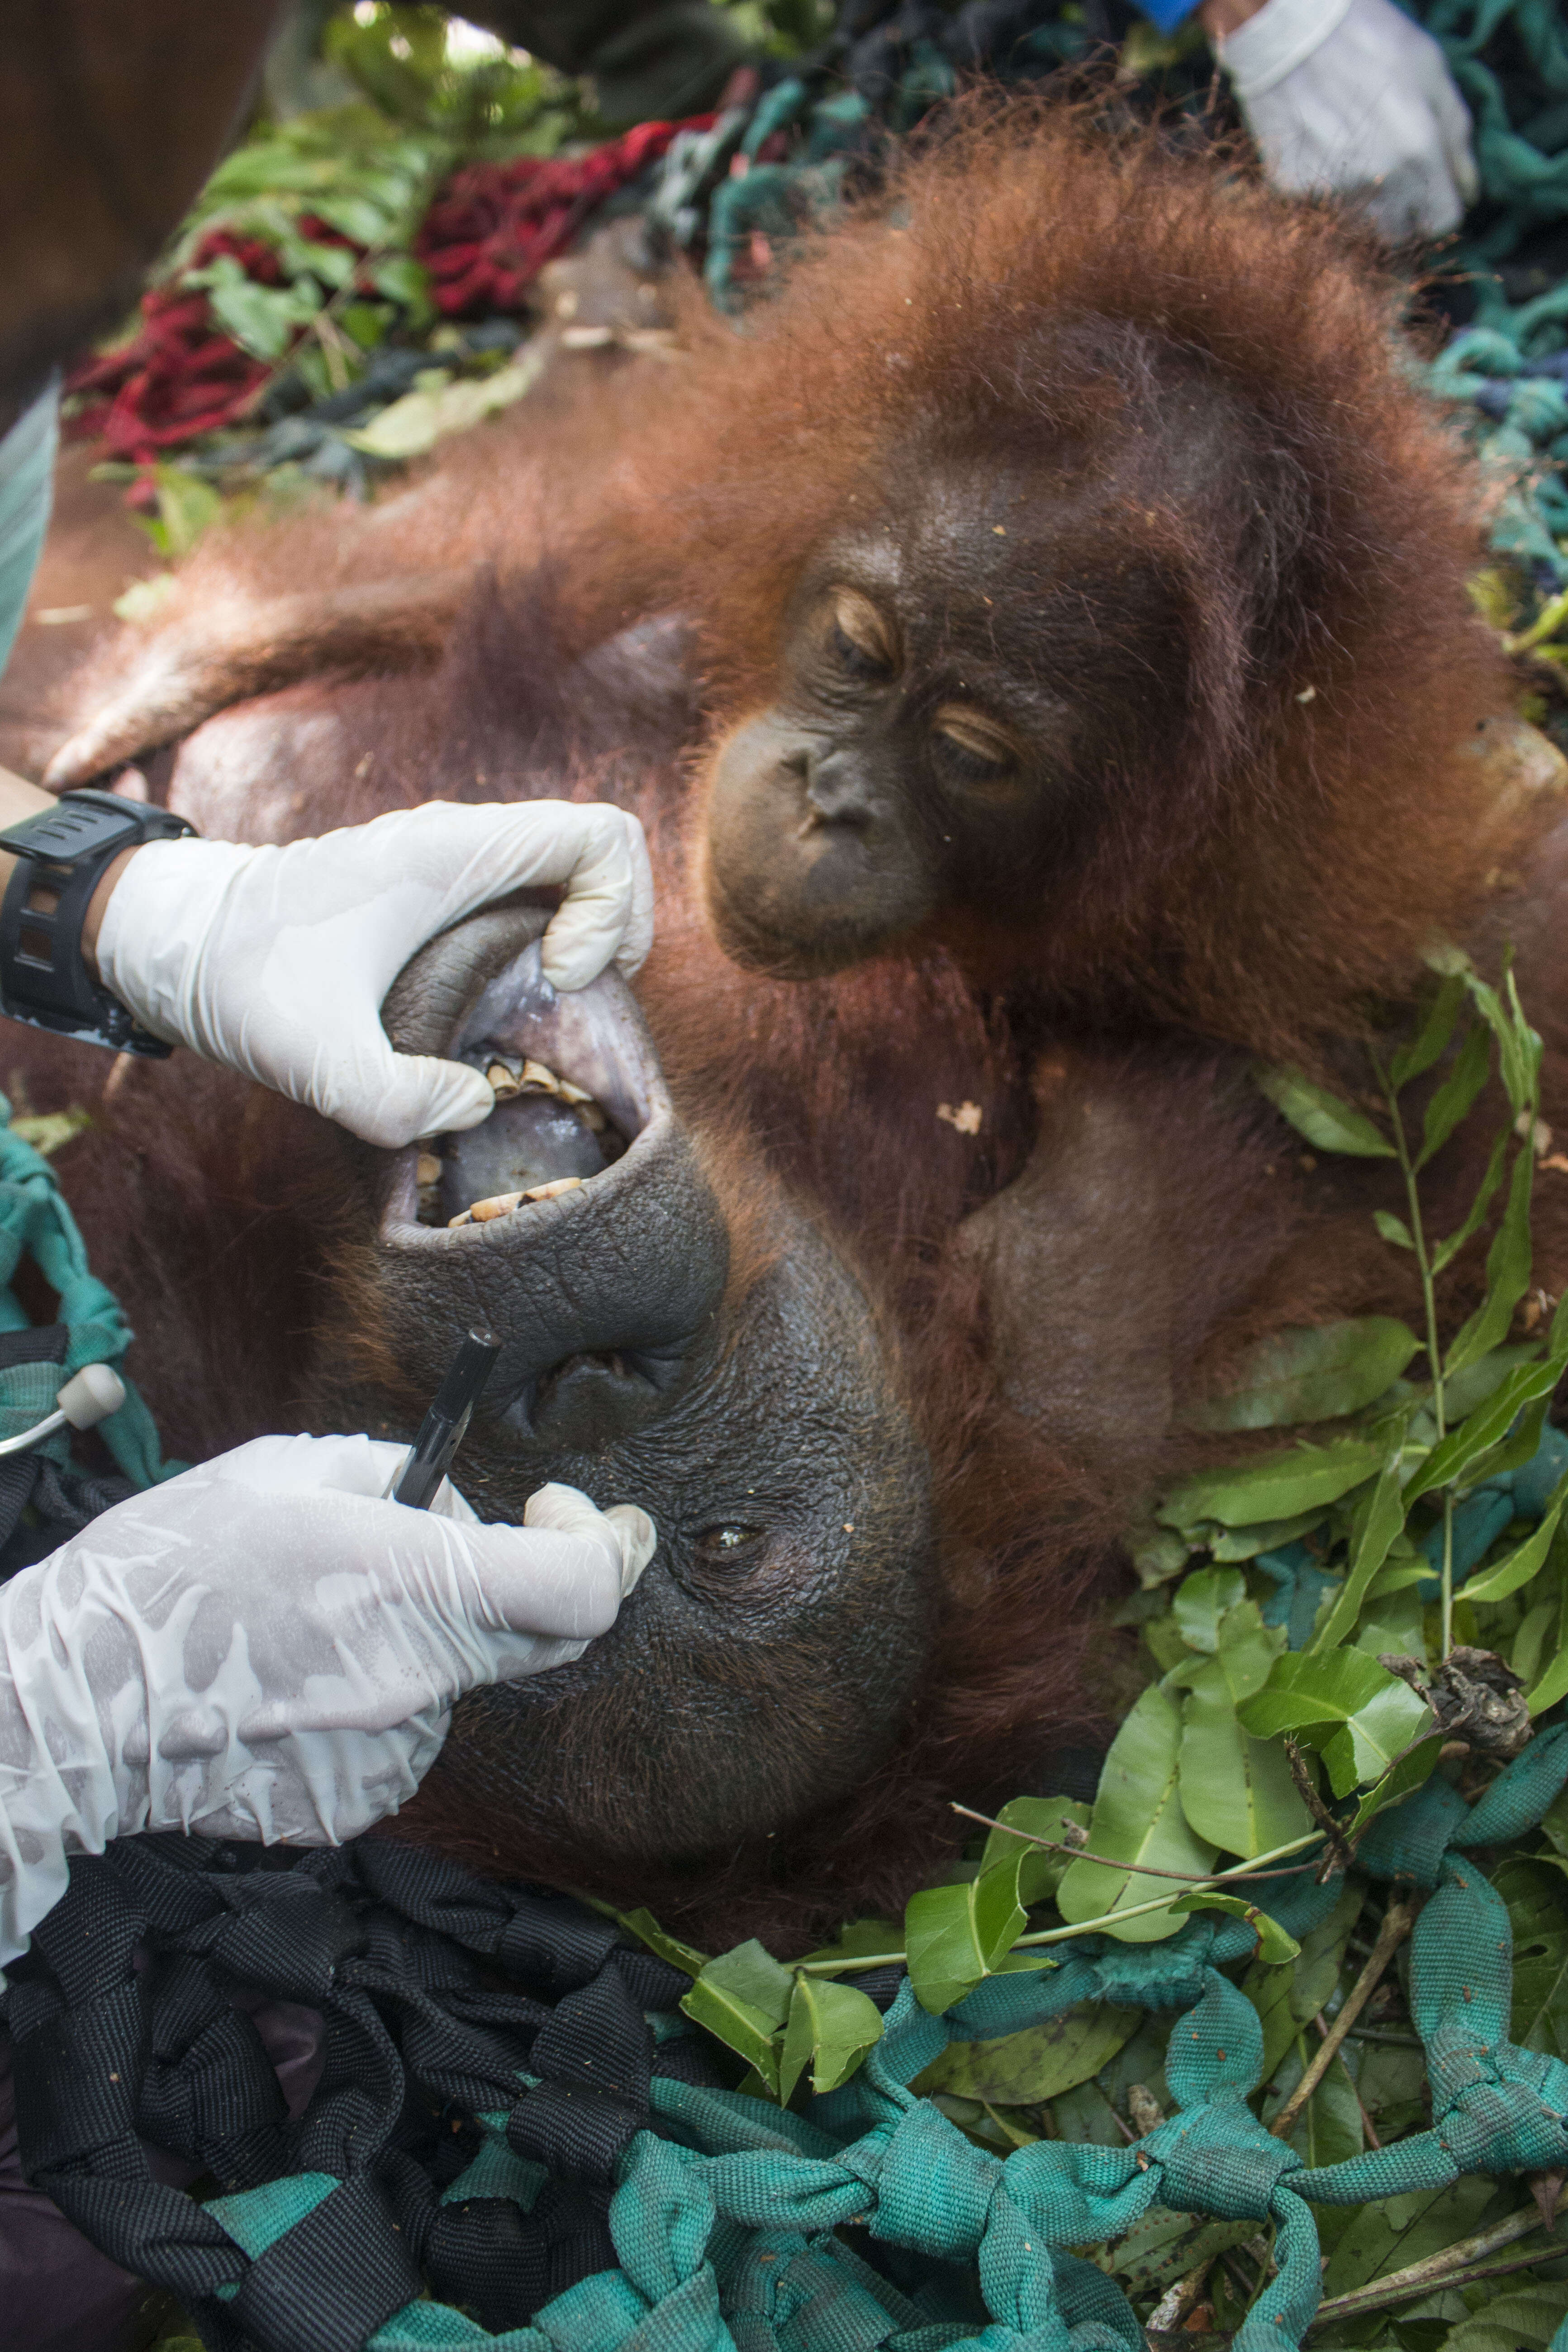 Baby orangutan watching mother getting examined